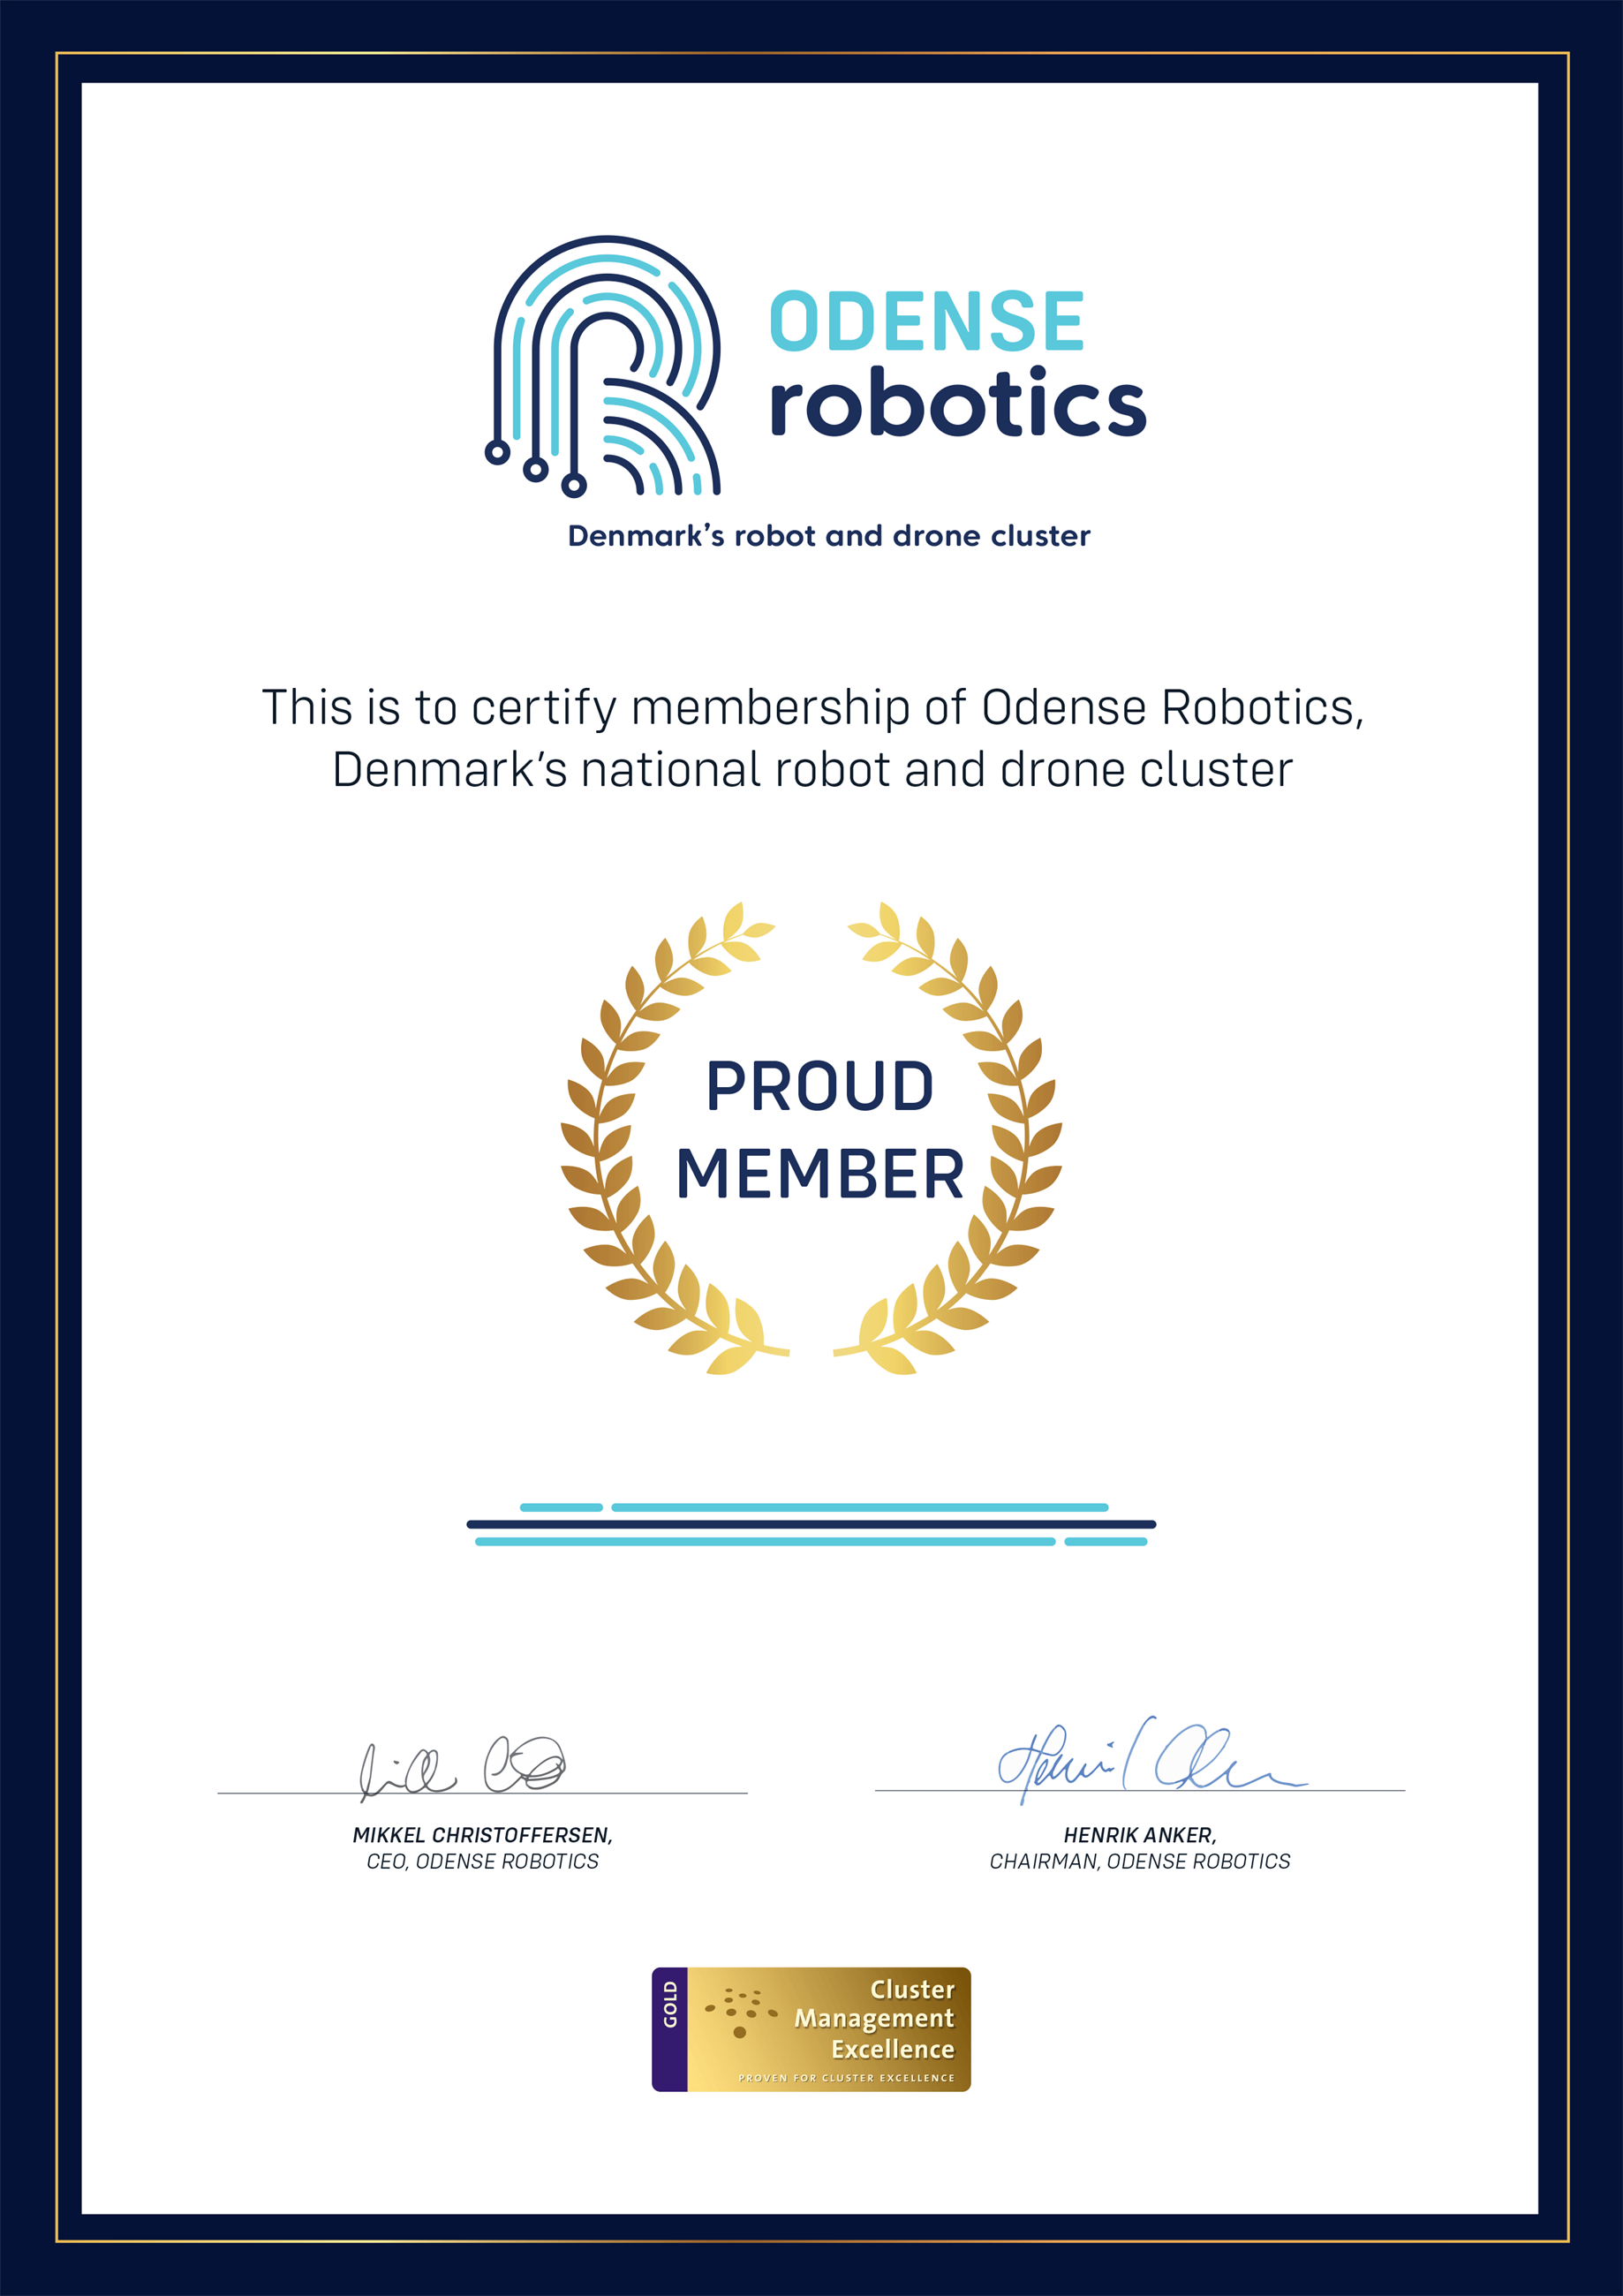 odense-robotics-membership-certificate